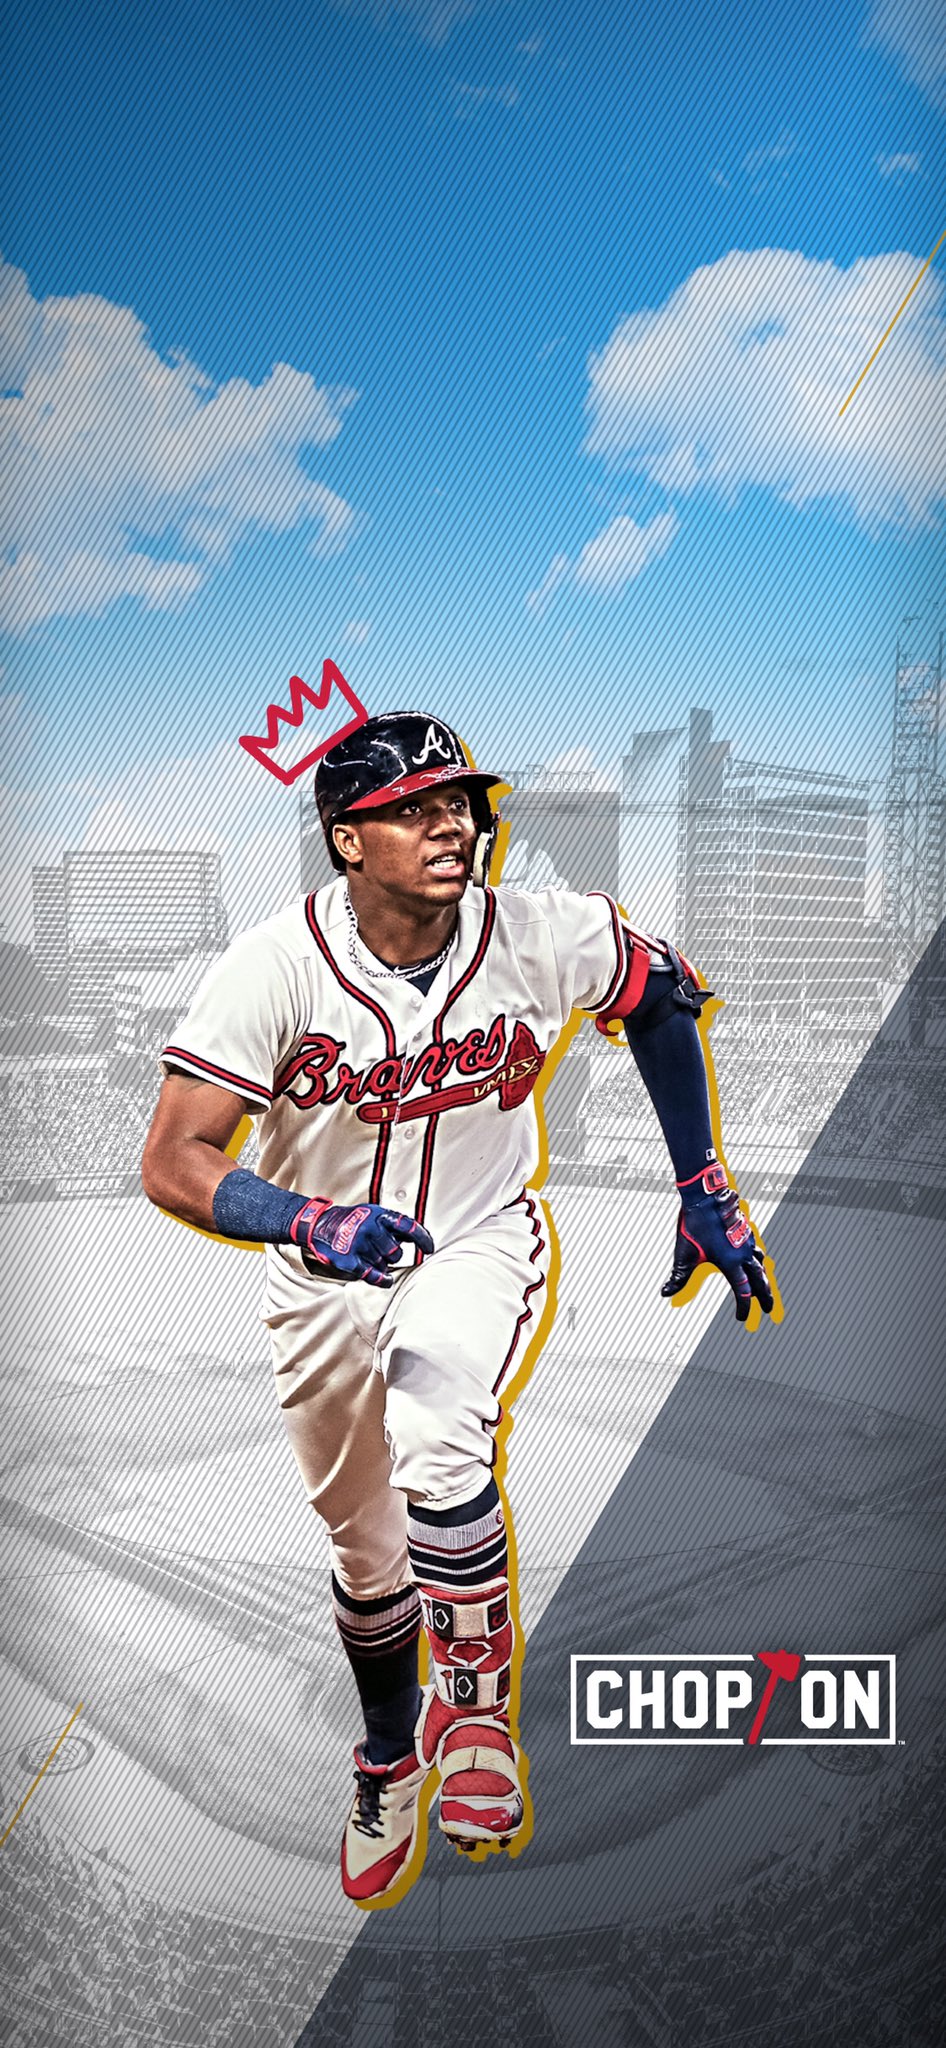 Atlanta Braves - #BravesST starts next week, get your wallpaper right! #WallpaperWednesday. #ChopOn